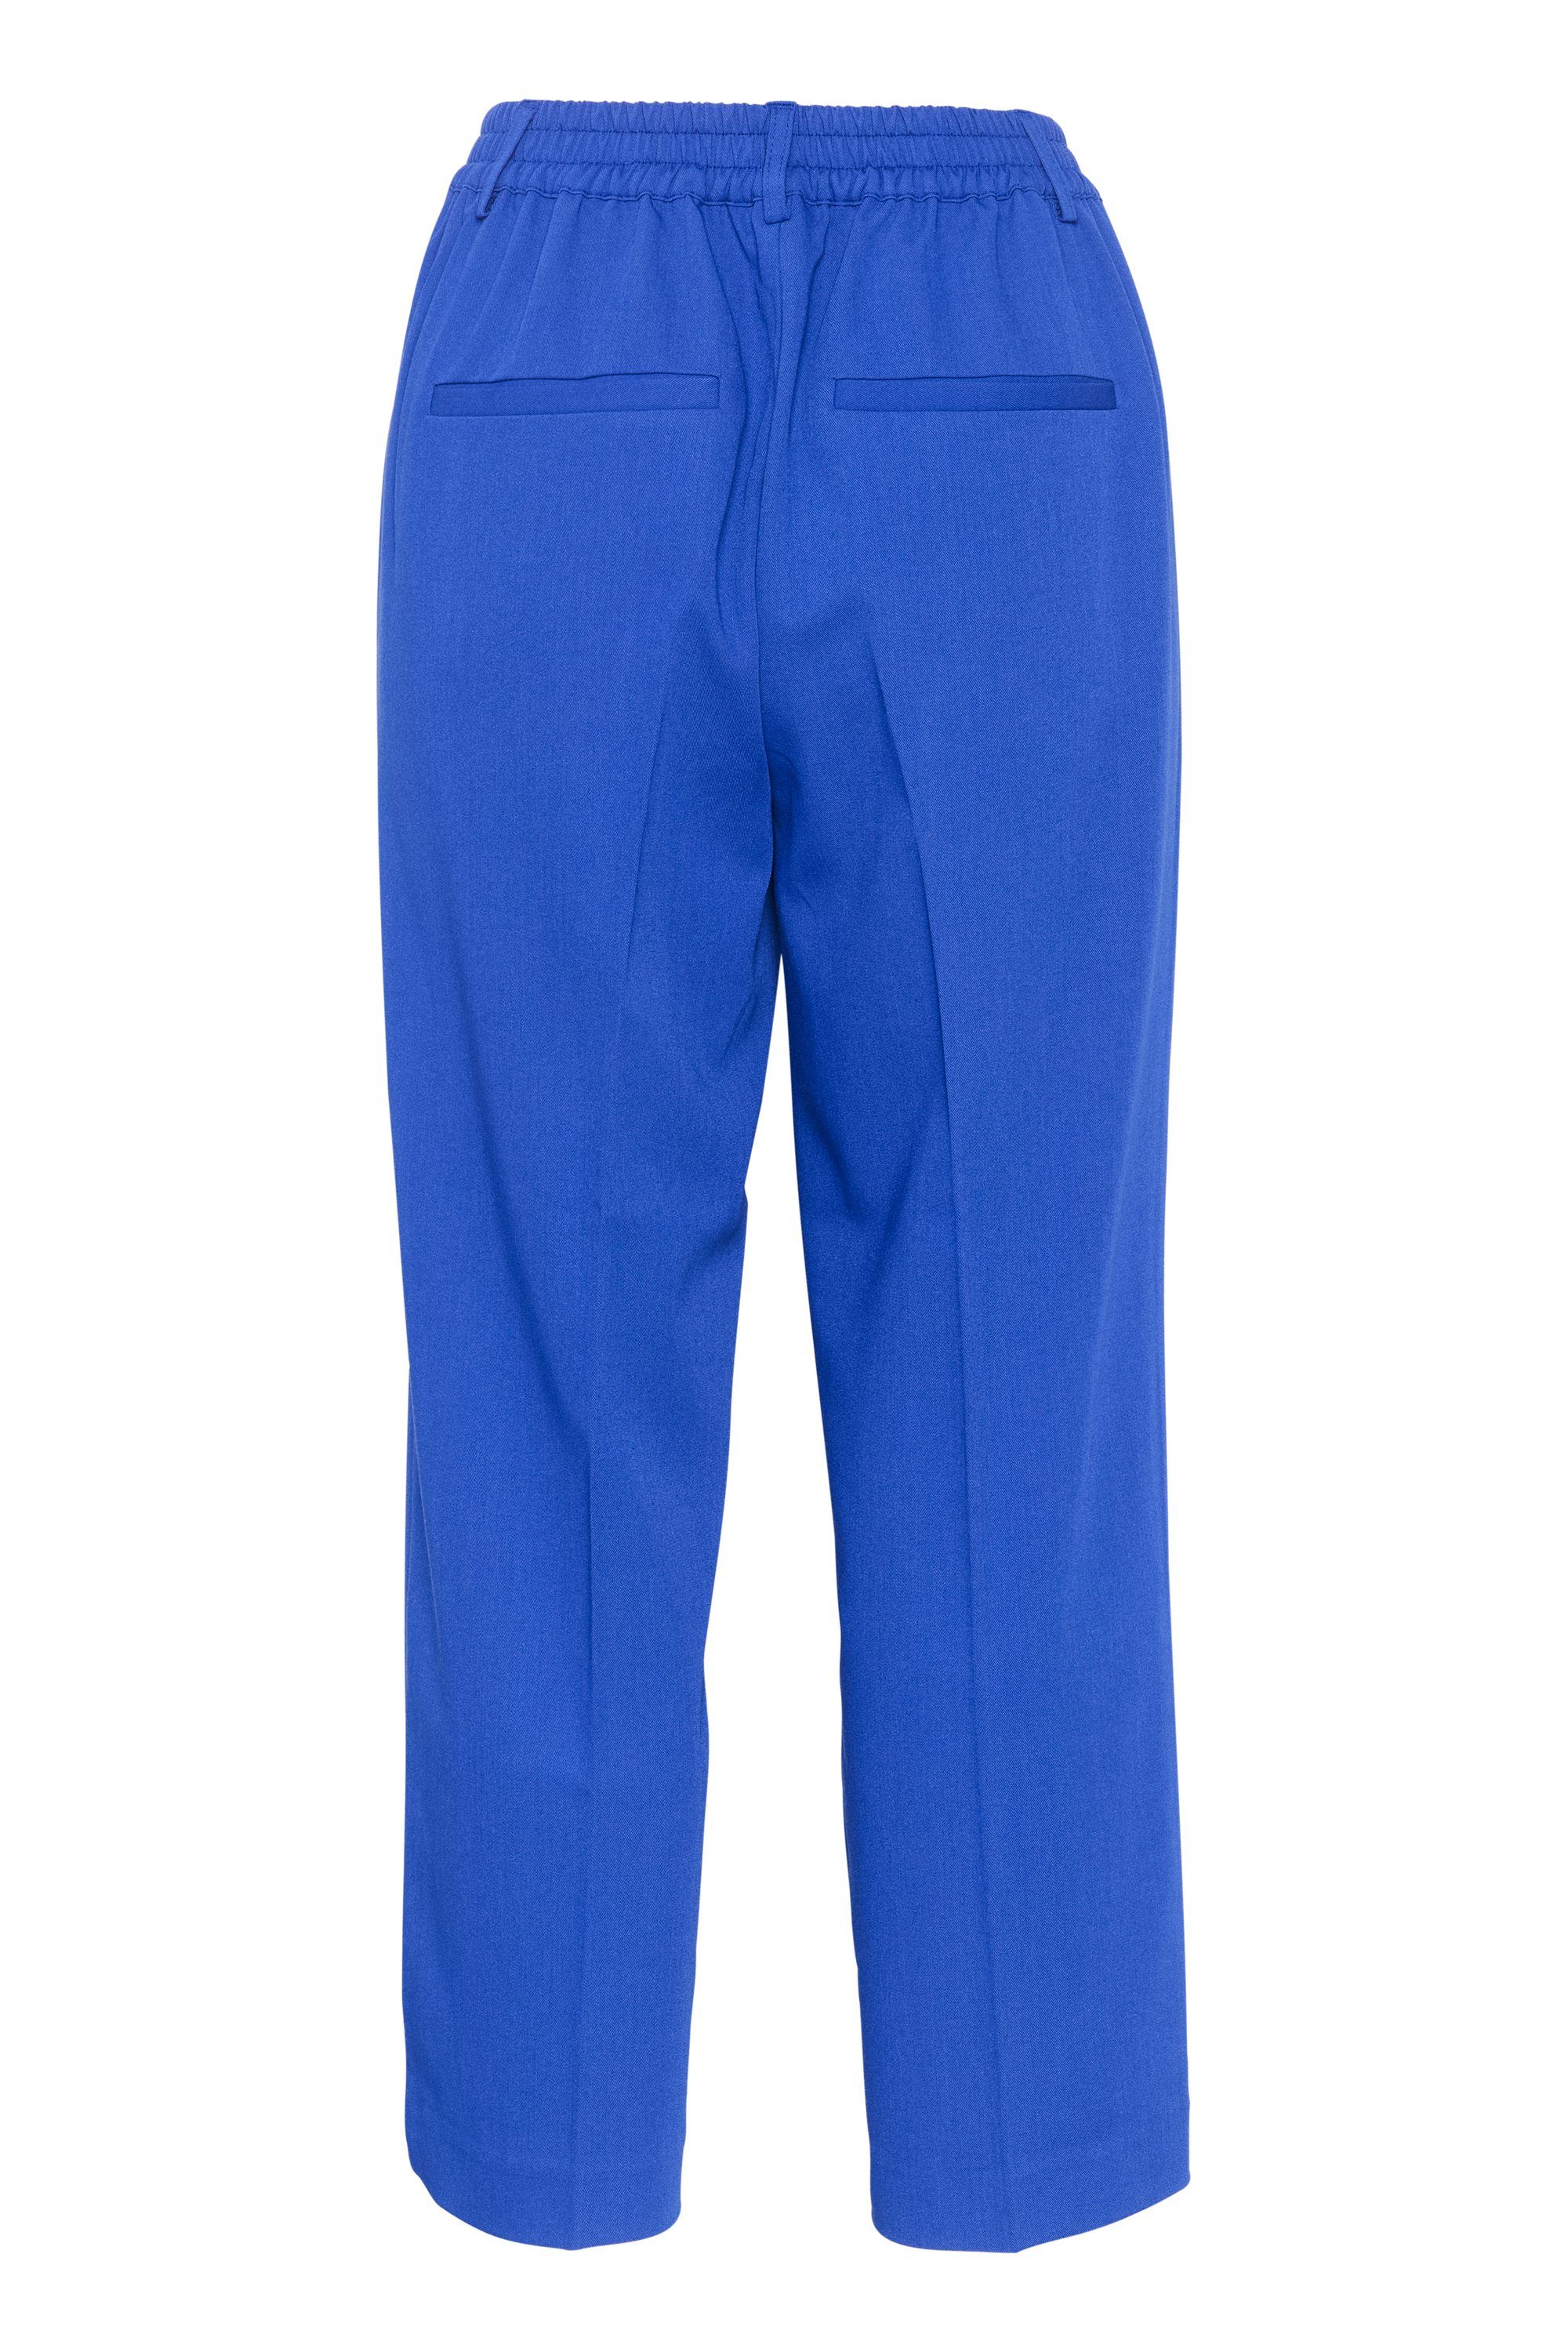 Pants Clematis KAsakura Suiting KAFFE Blue Anzughose